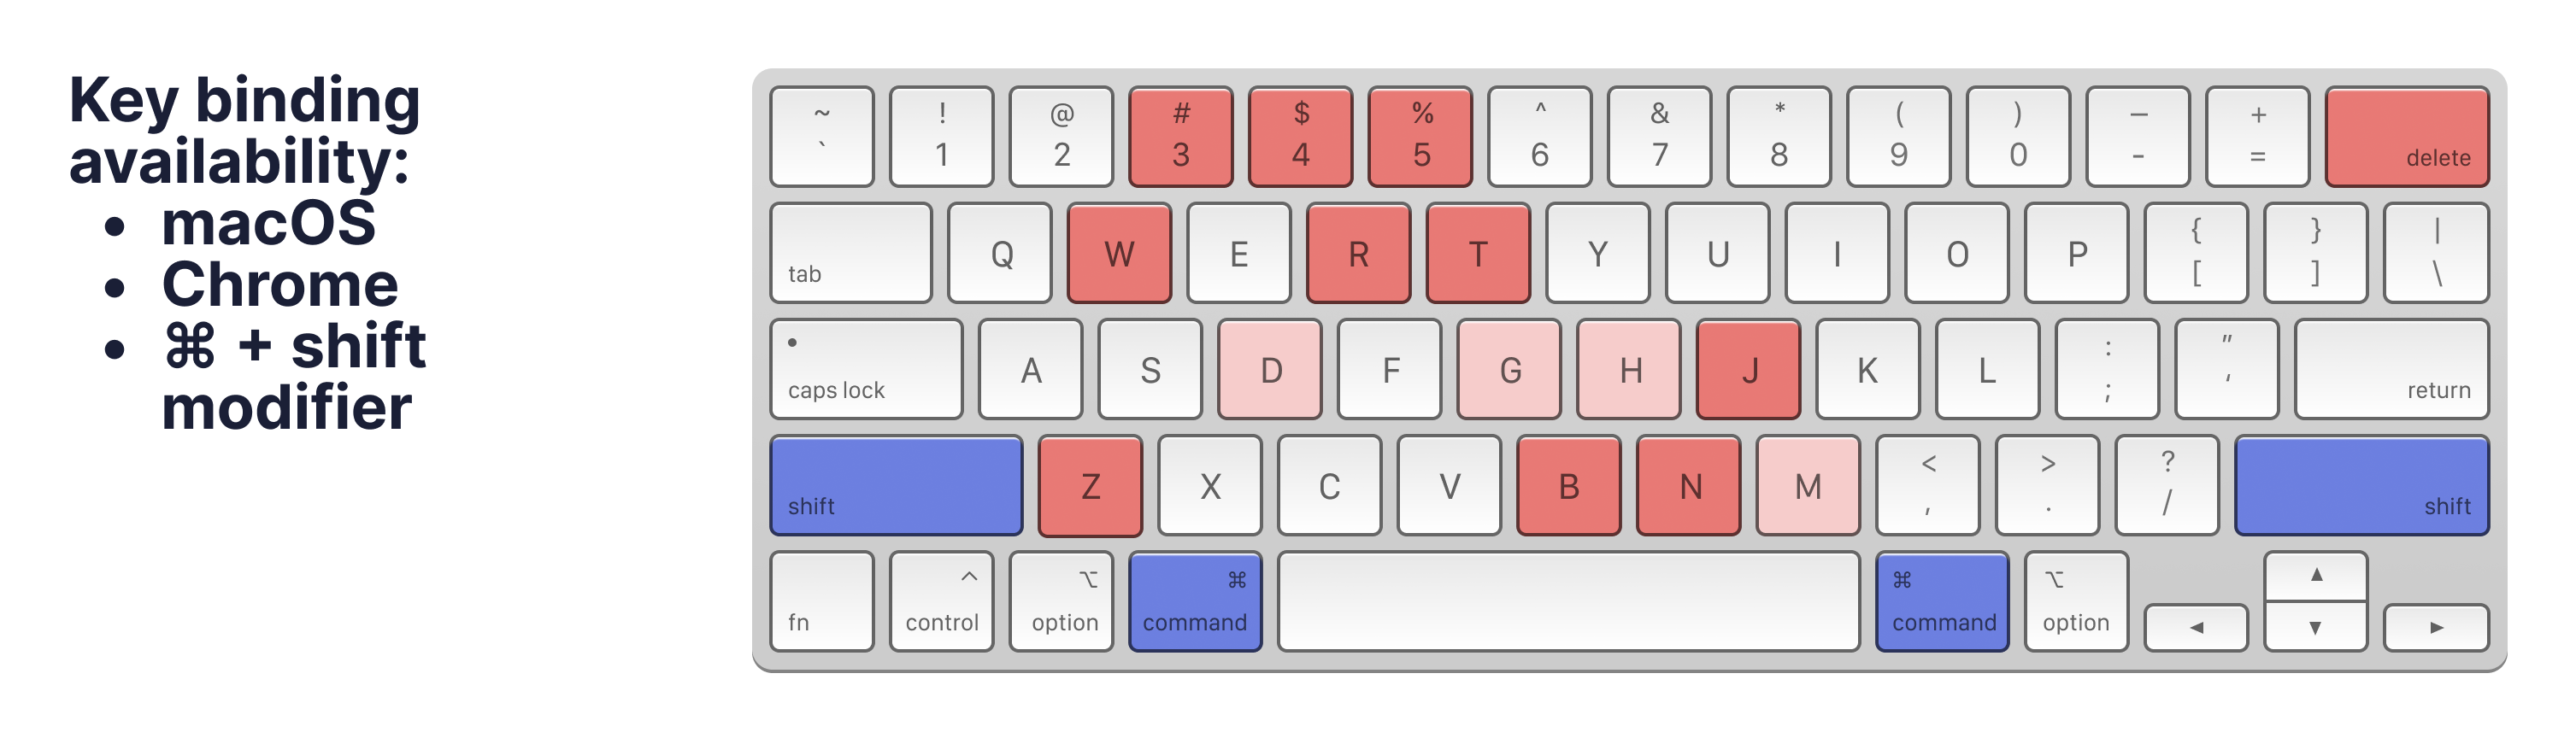 Keyboard shortcut availability: macOS+Chrome+cmd+option